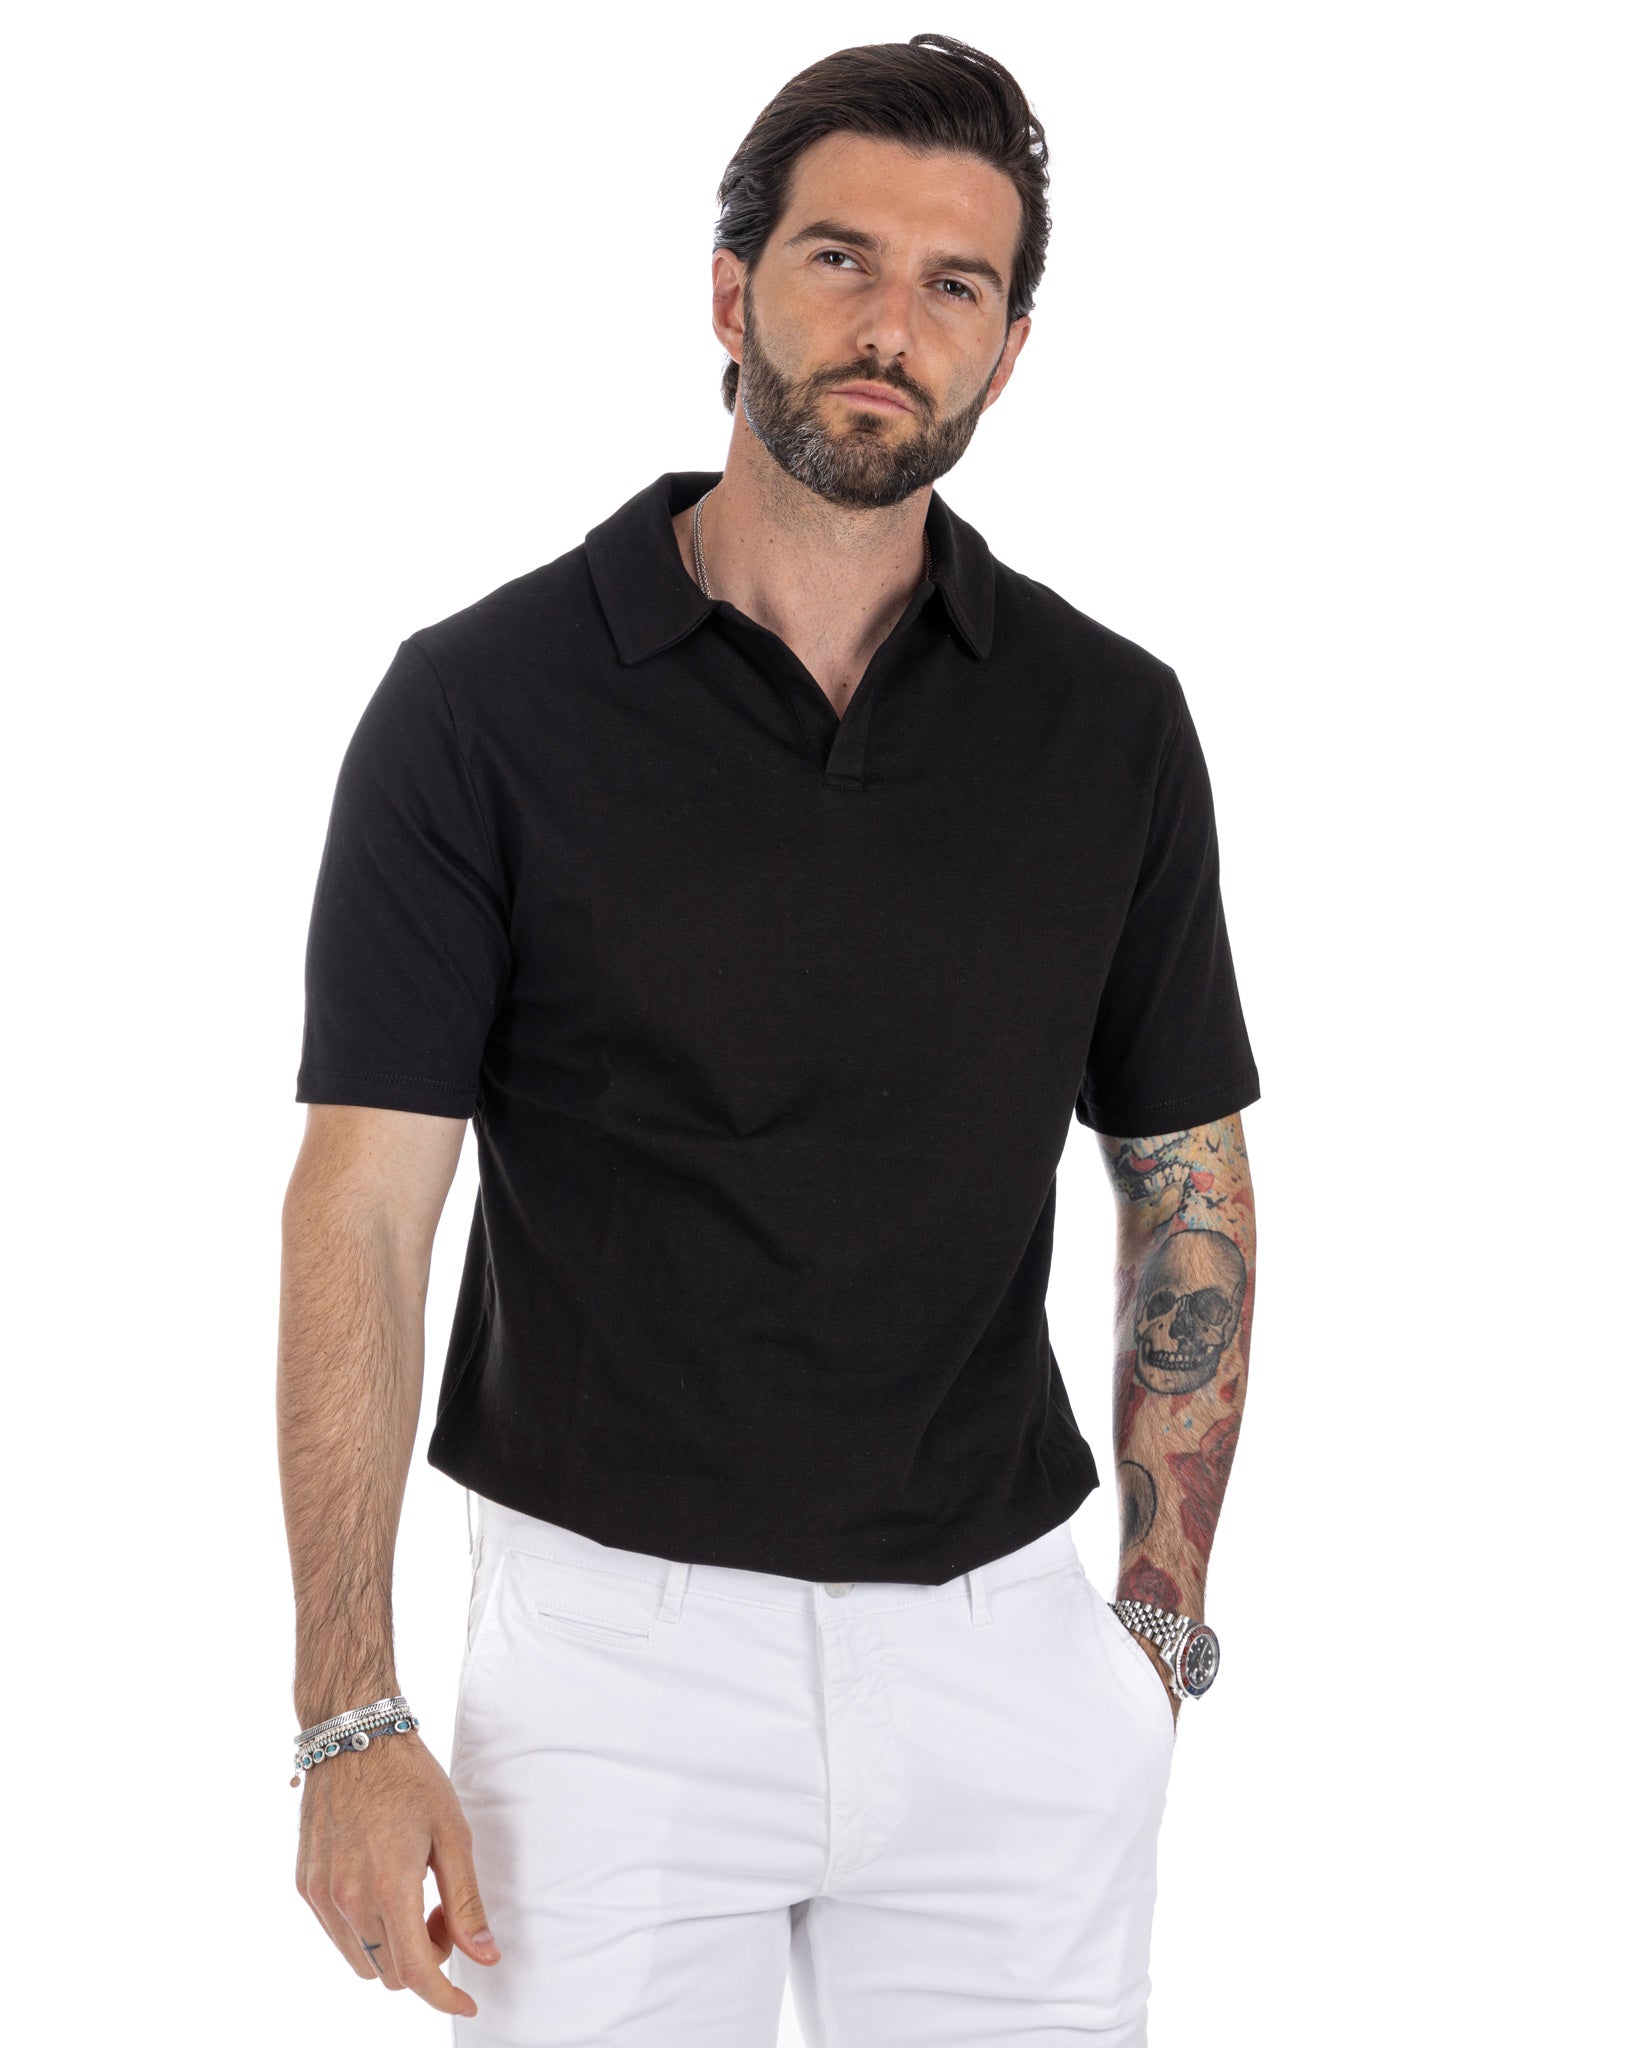 Drew - basic black cotton polo shirt